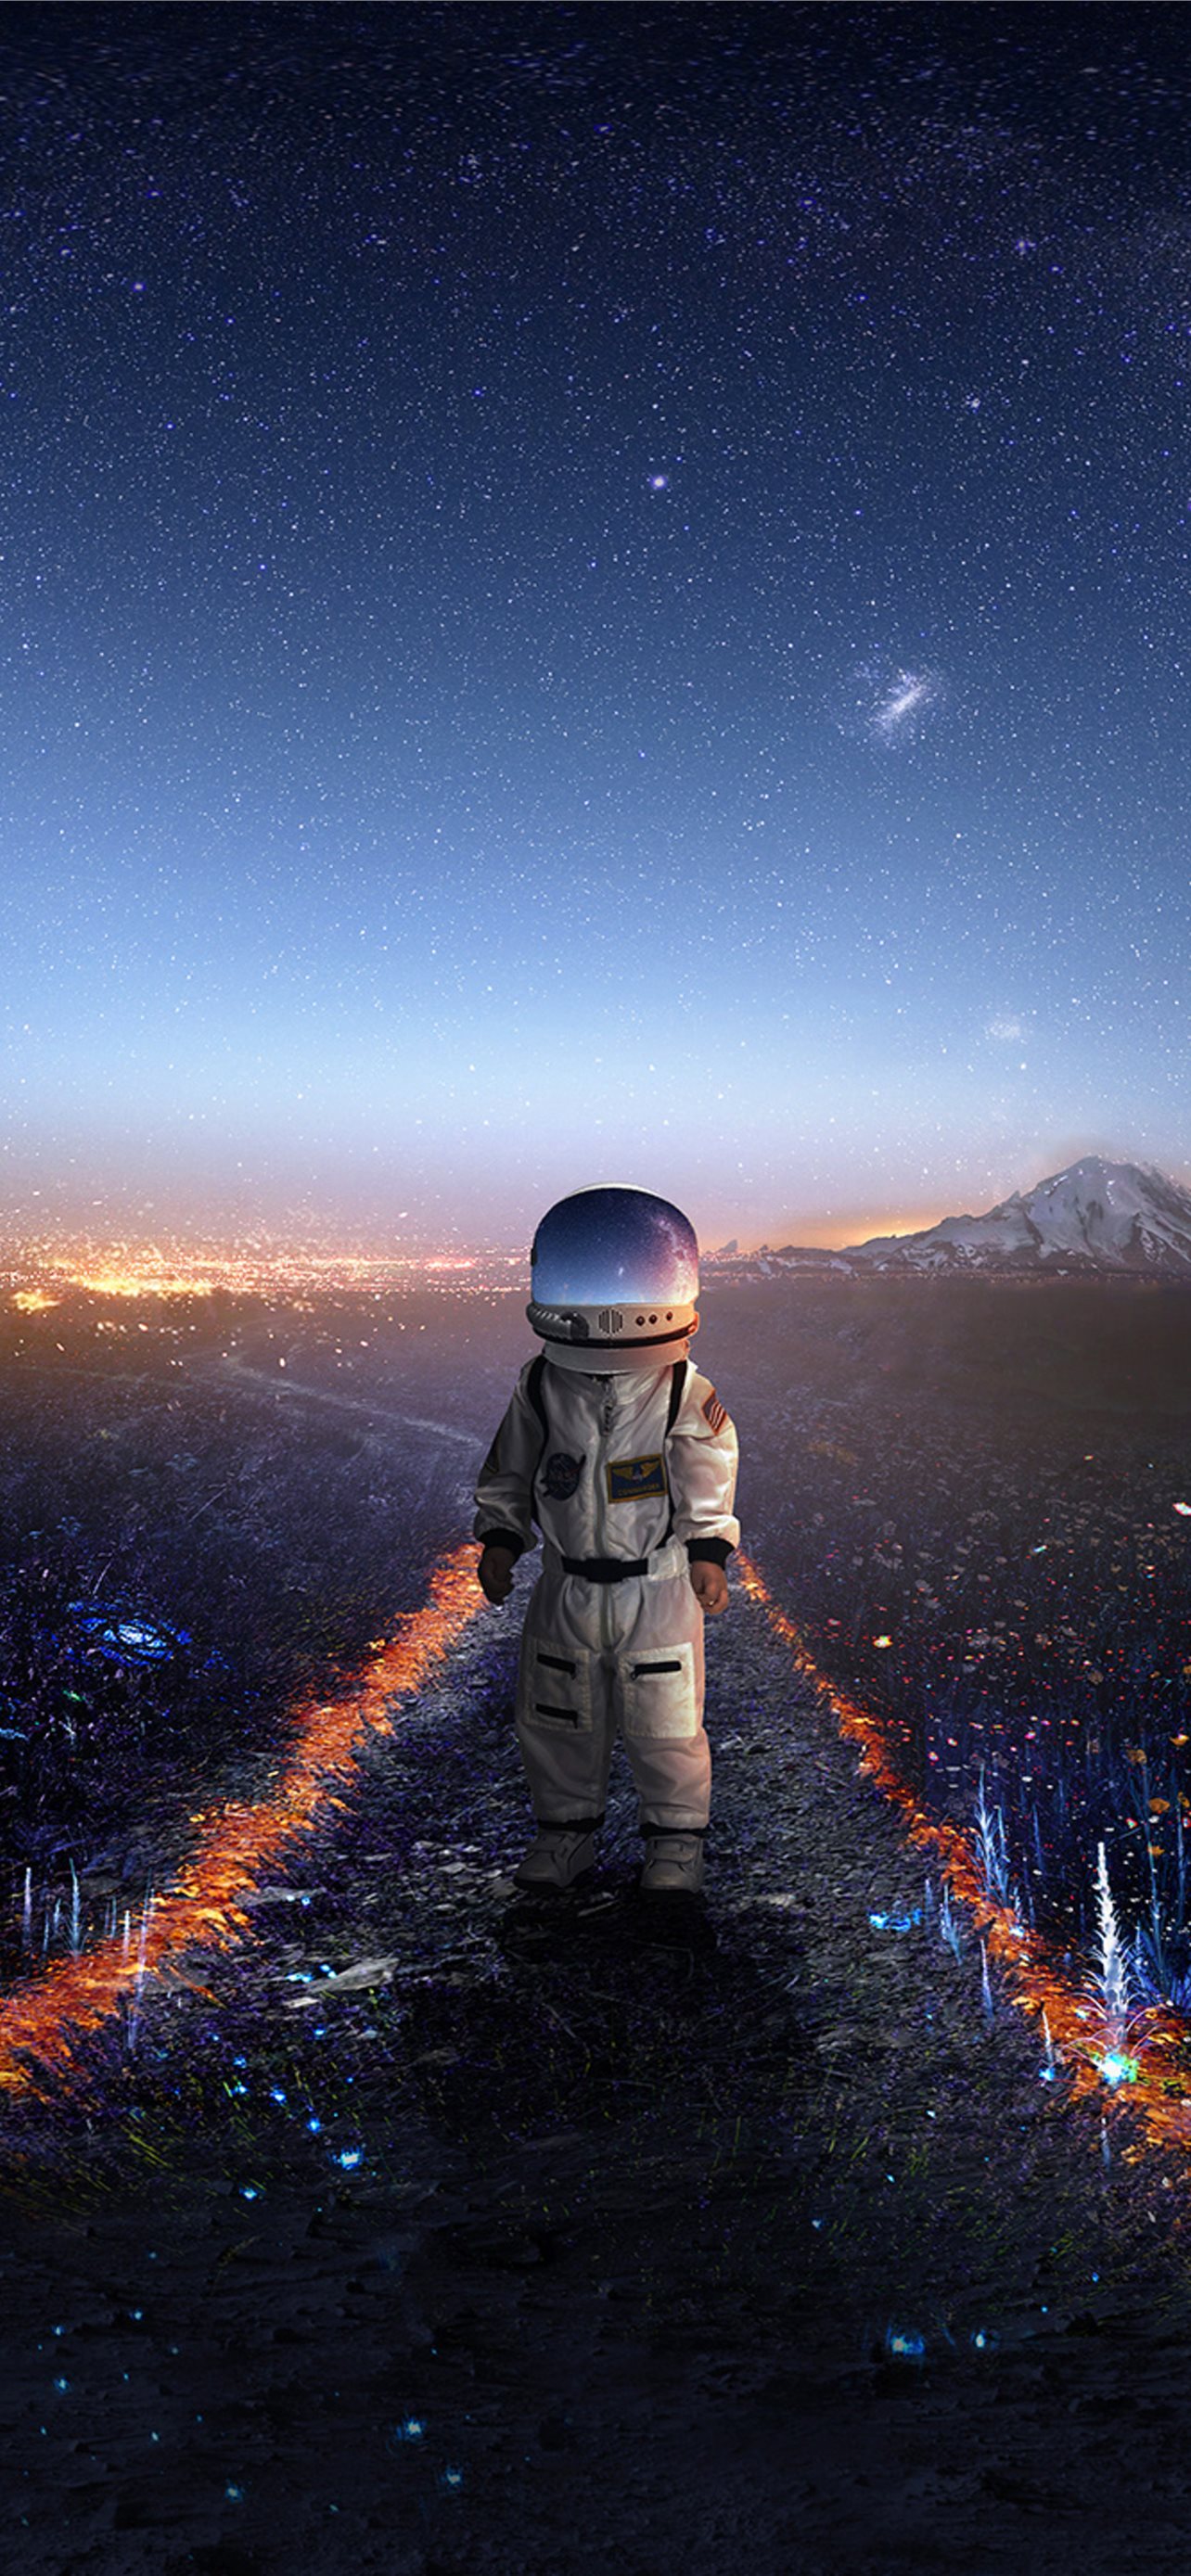 Astronaut Creative Artwork Sony Xperia. iPhone Wallpaper Free Download